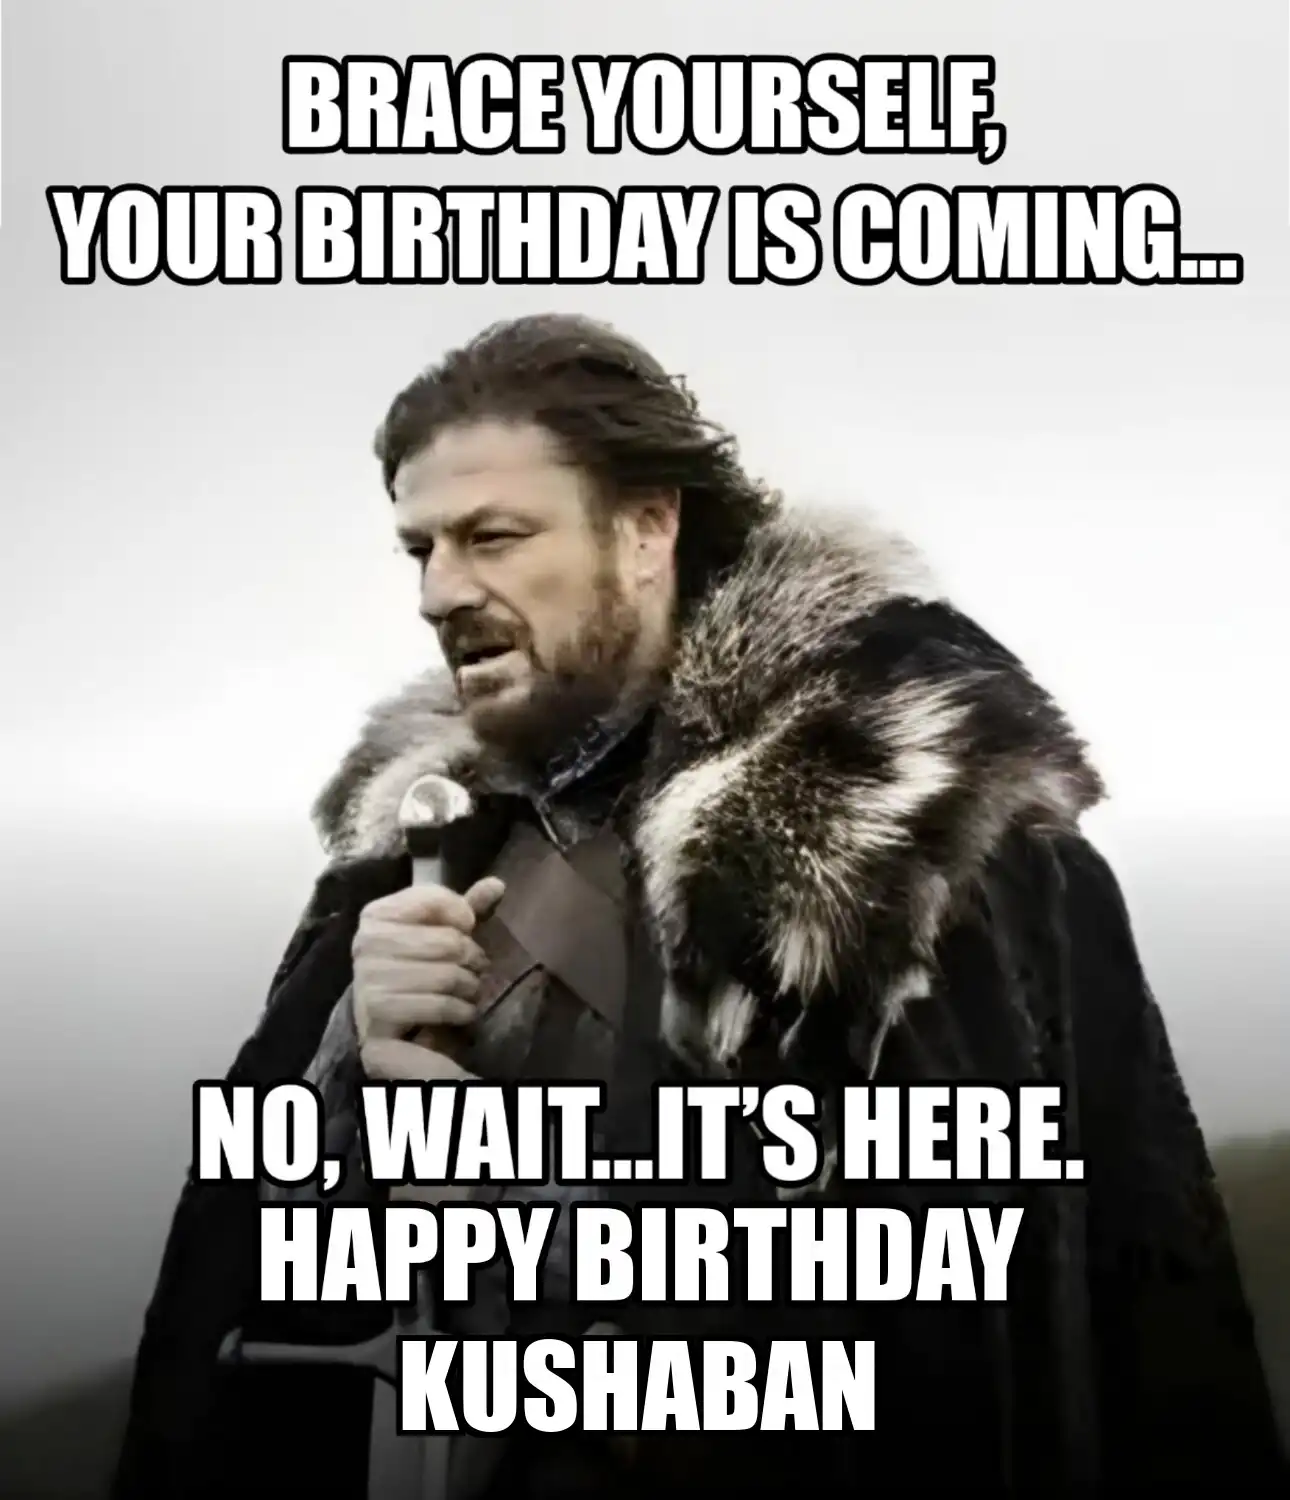 Happy Birthday Kushaban Brace Yourself Your Birthday Is Coming Meme